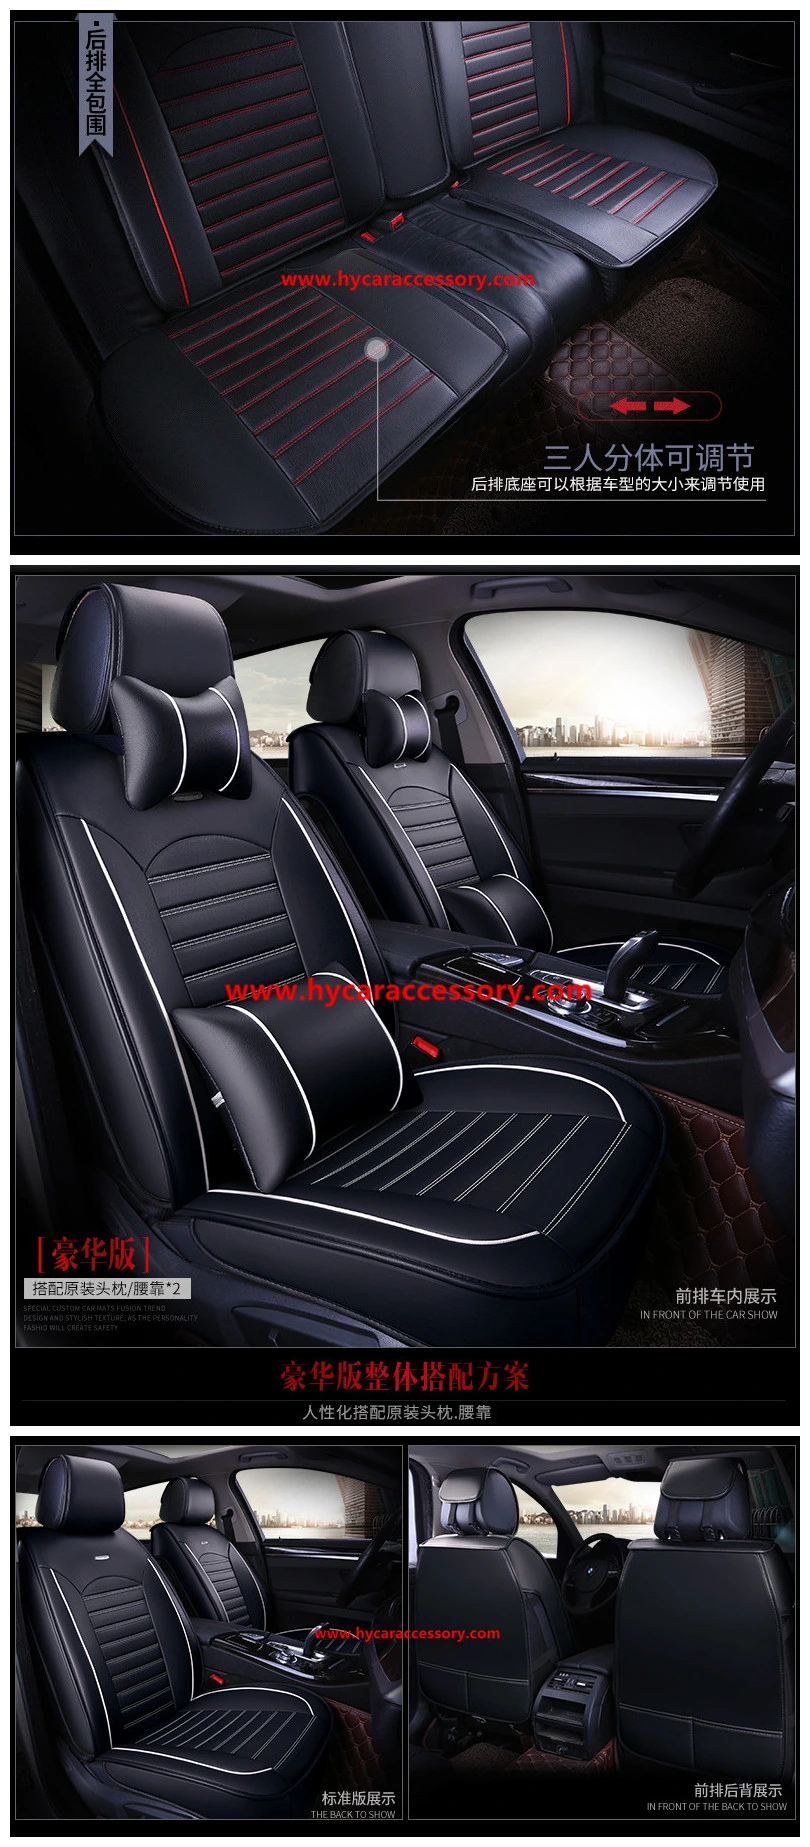 Car Accessory Car Decoration Seat Cushion Universal Black Pure Leather Auto Car Seat Cover